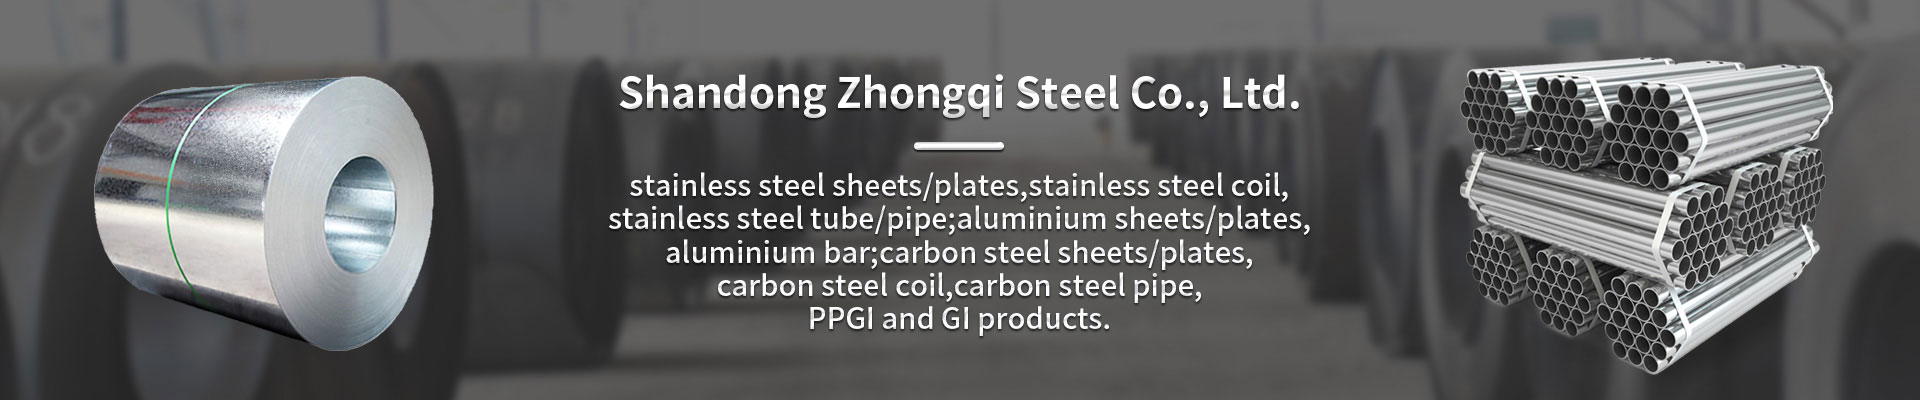 Shandong Zhongqi Steel Co., Ltd.